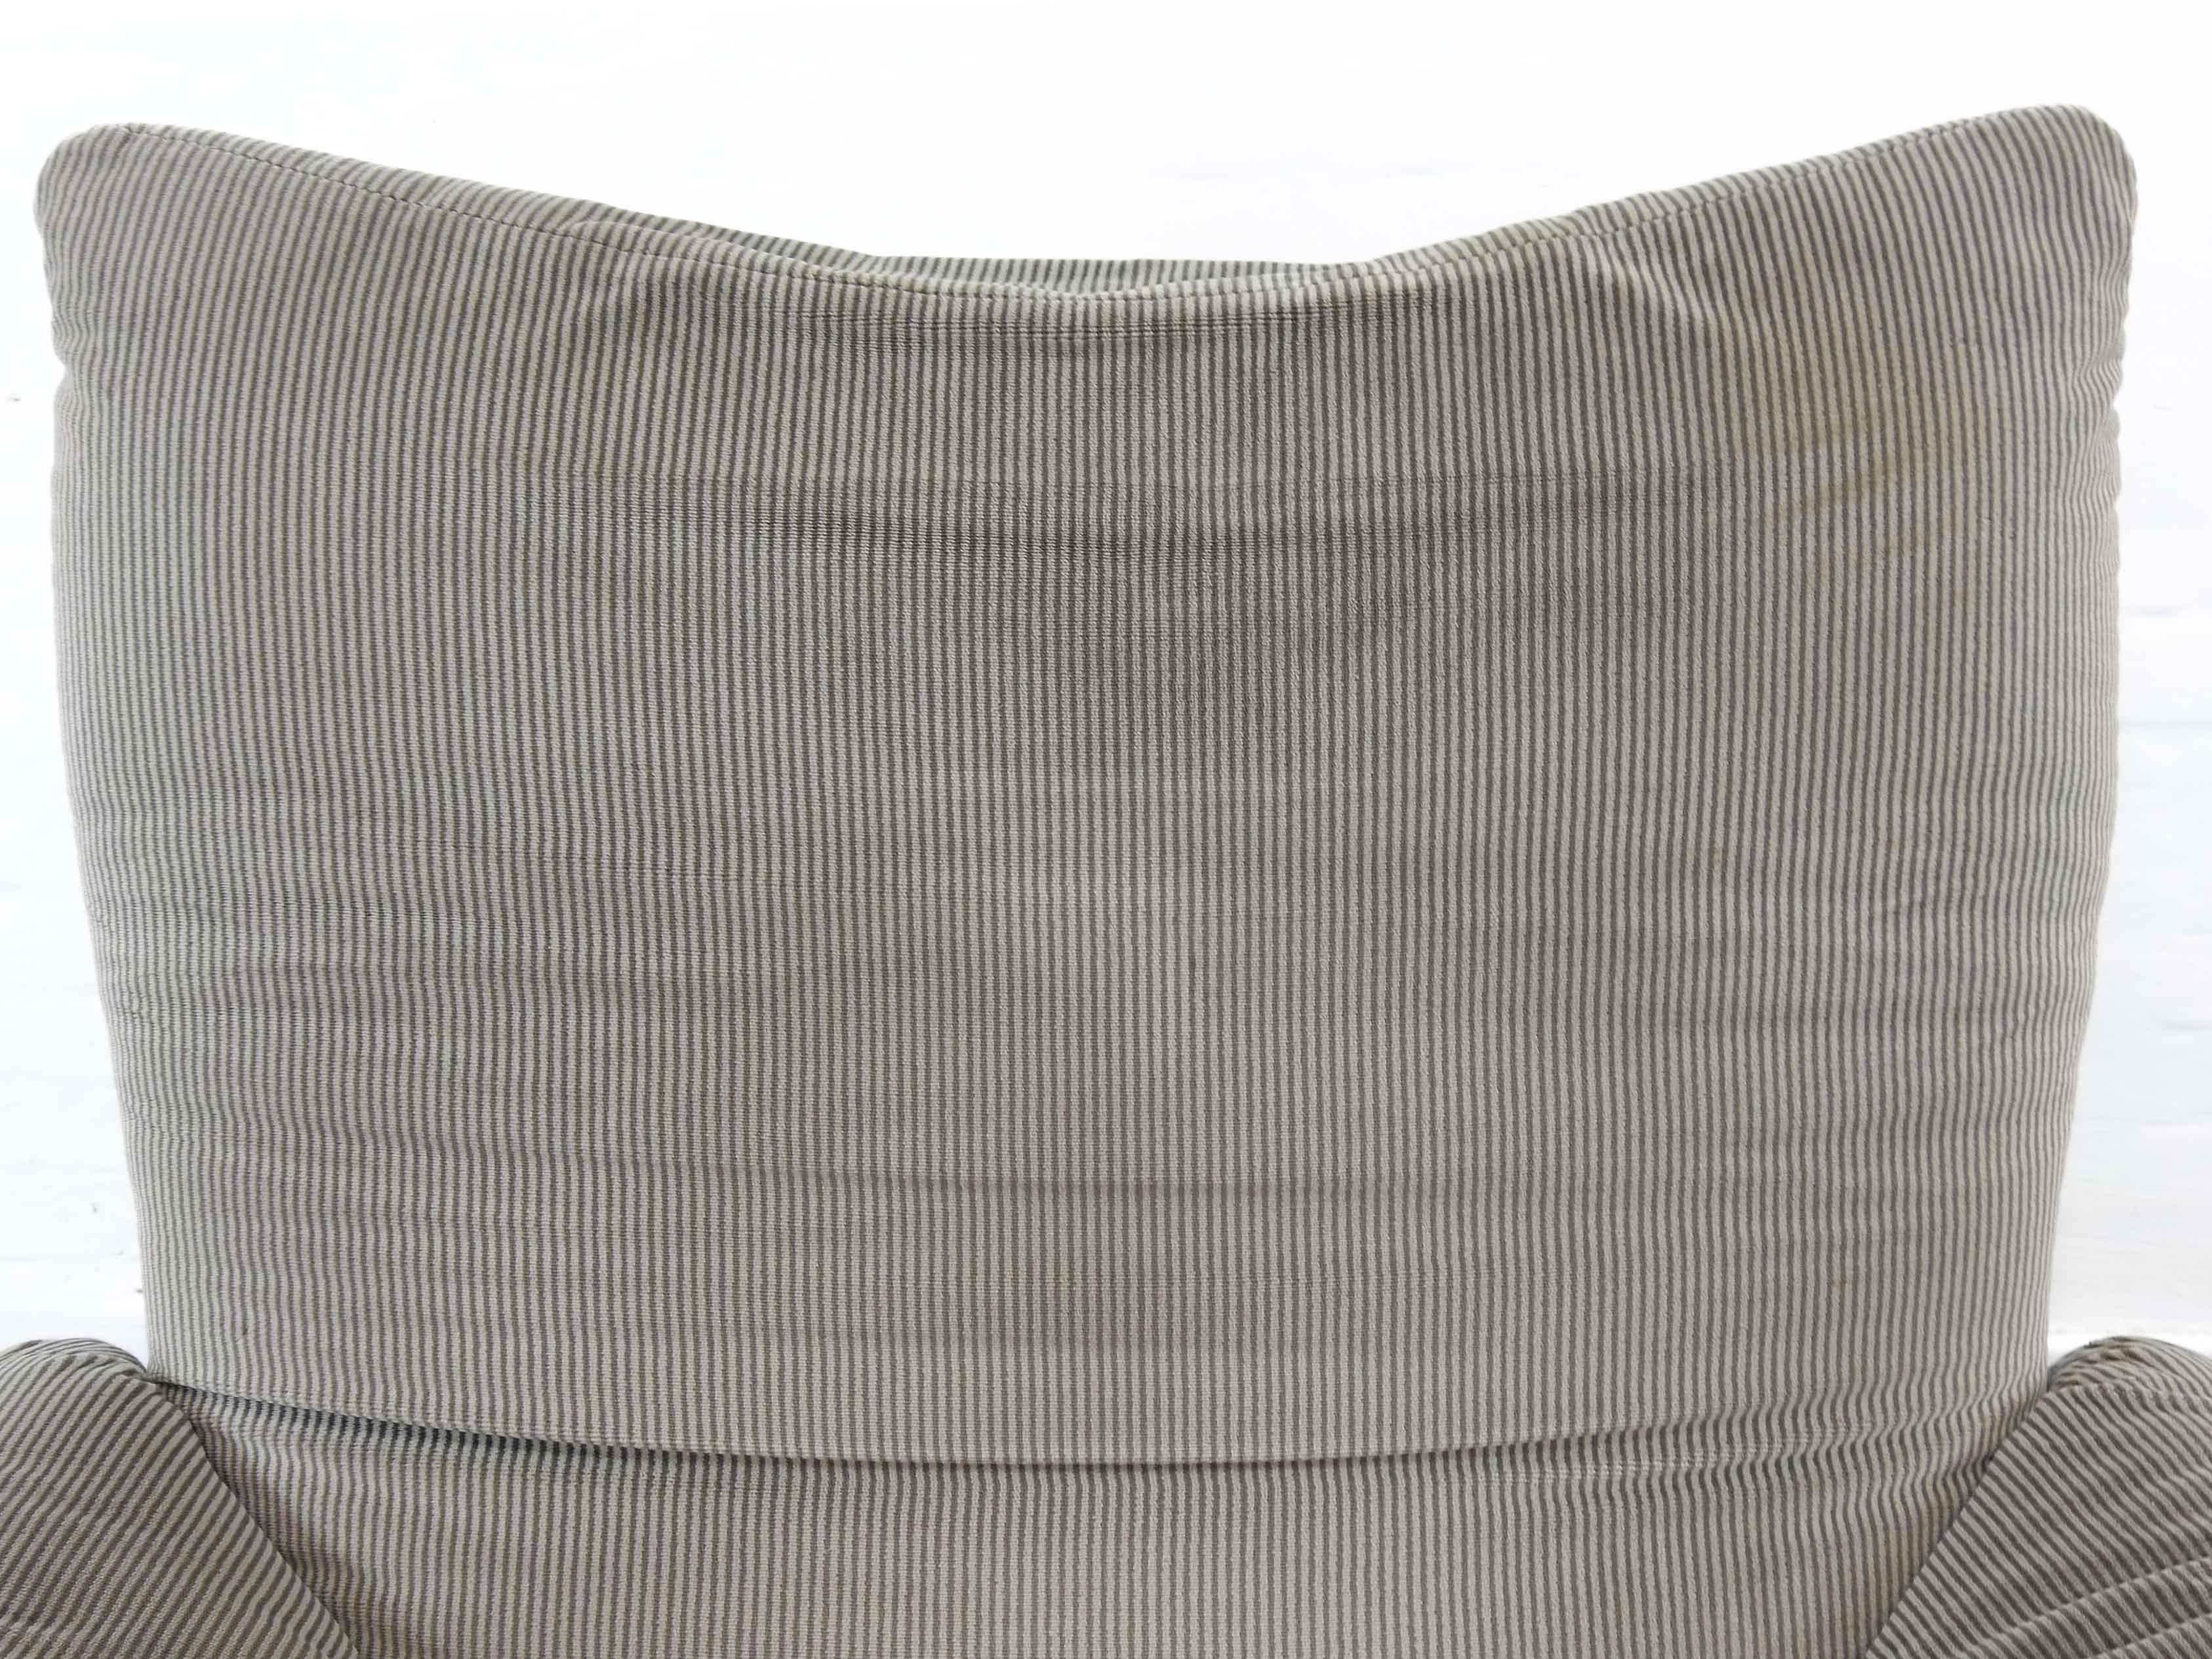 Cassina Maralunga Chair and Ottoman /Stool in Grey Striped Fabrics 4